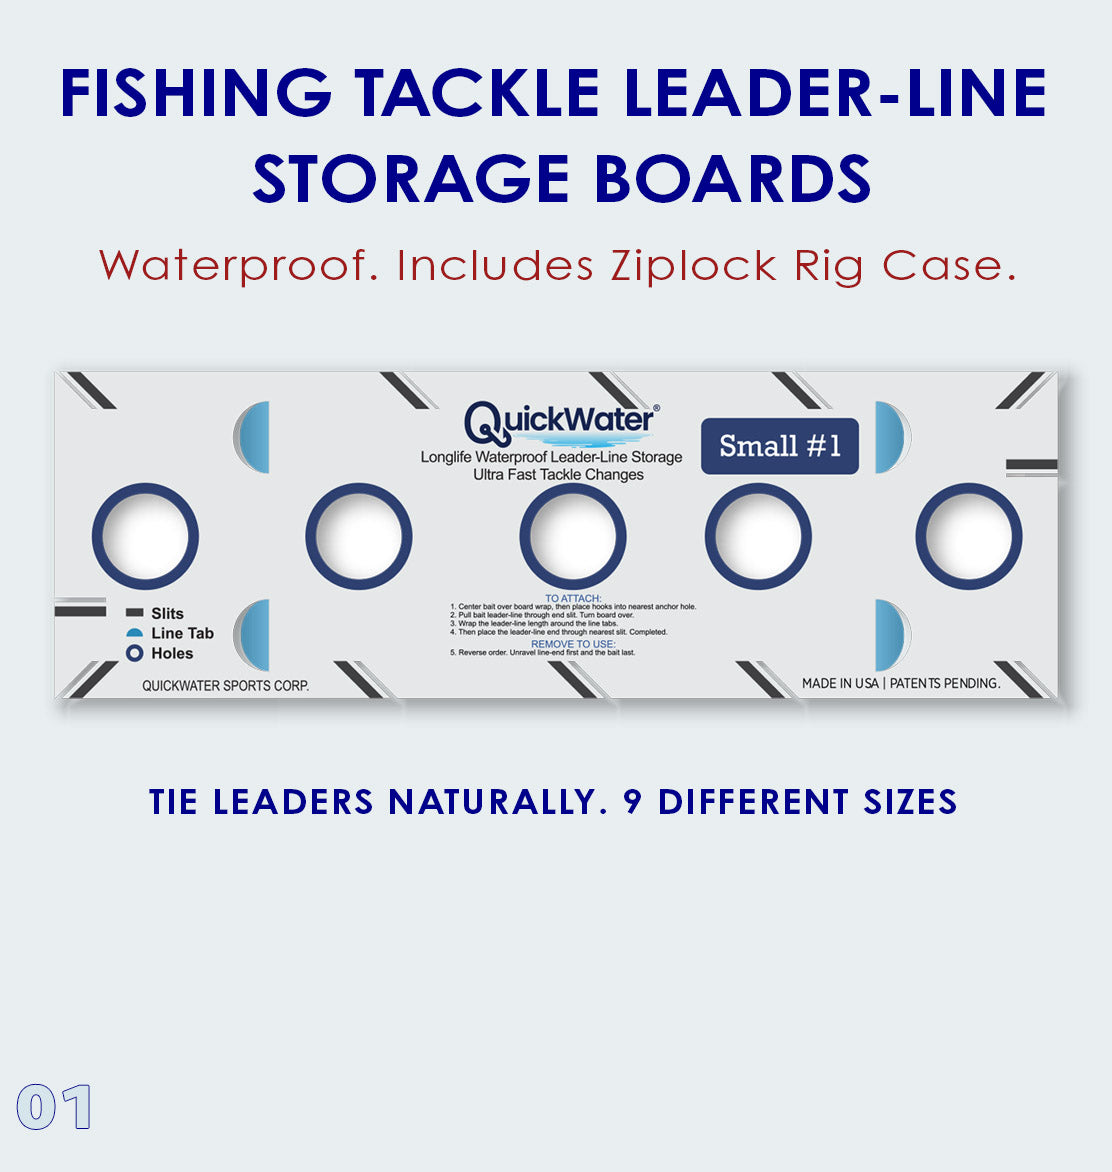 Slide 1: Fishing Tackle Leader-line Storage Boards • Waterproof, Ziplock Rig Case • Tie Leaders Naturally, 9 Different Sizes